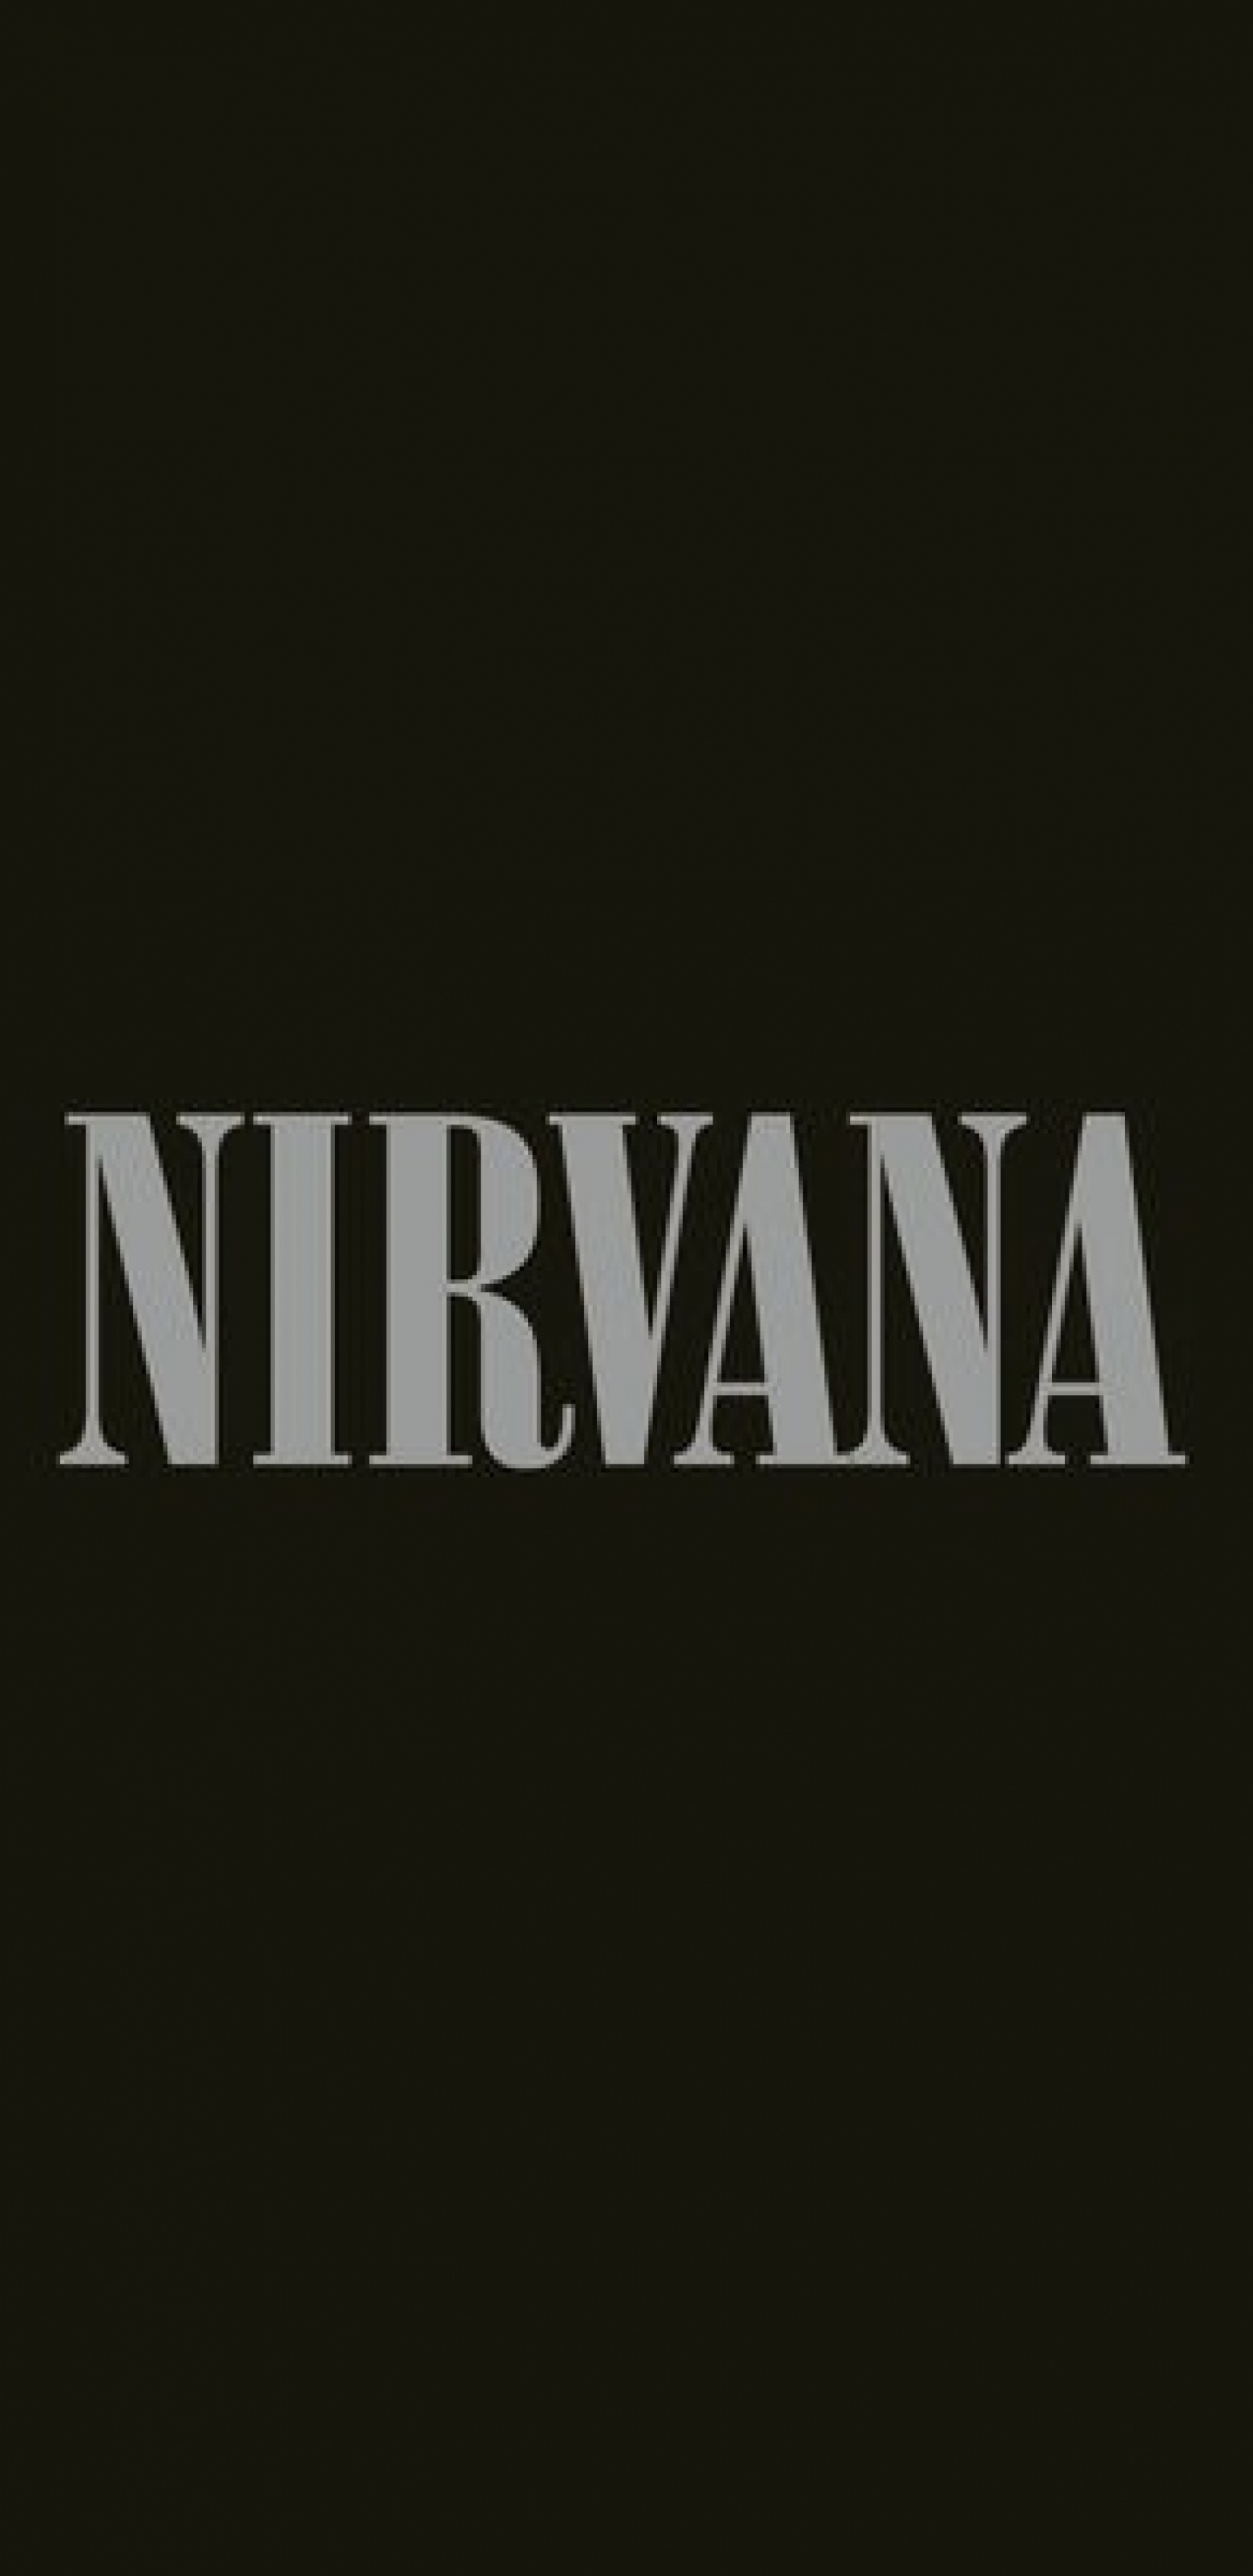 Nirvana, Album, Graphic Design, Text, Black. Wallpaper in 1440x2960 Resolution